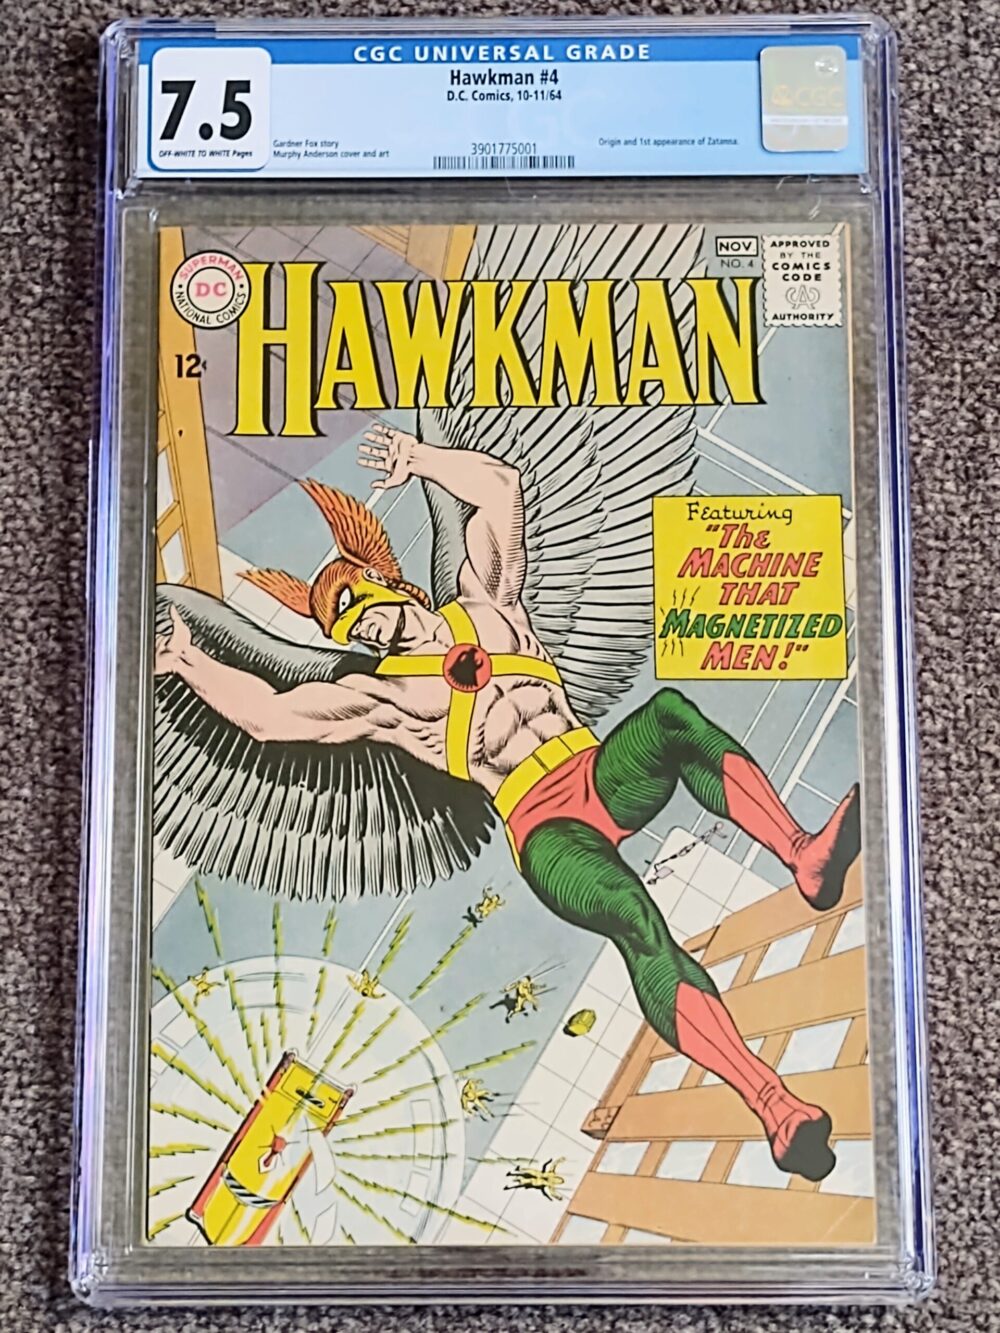 Hawkman #4 (11/64)